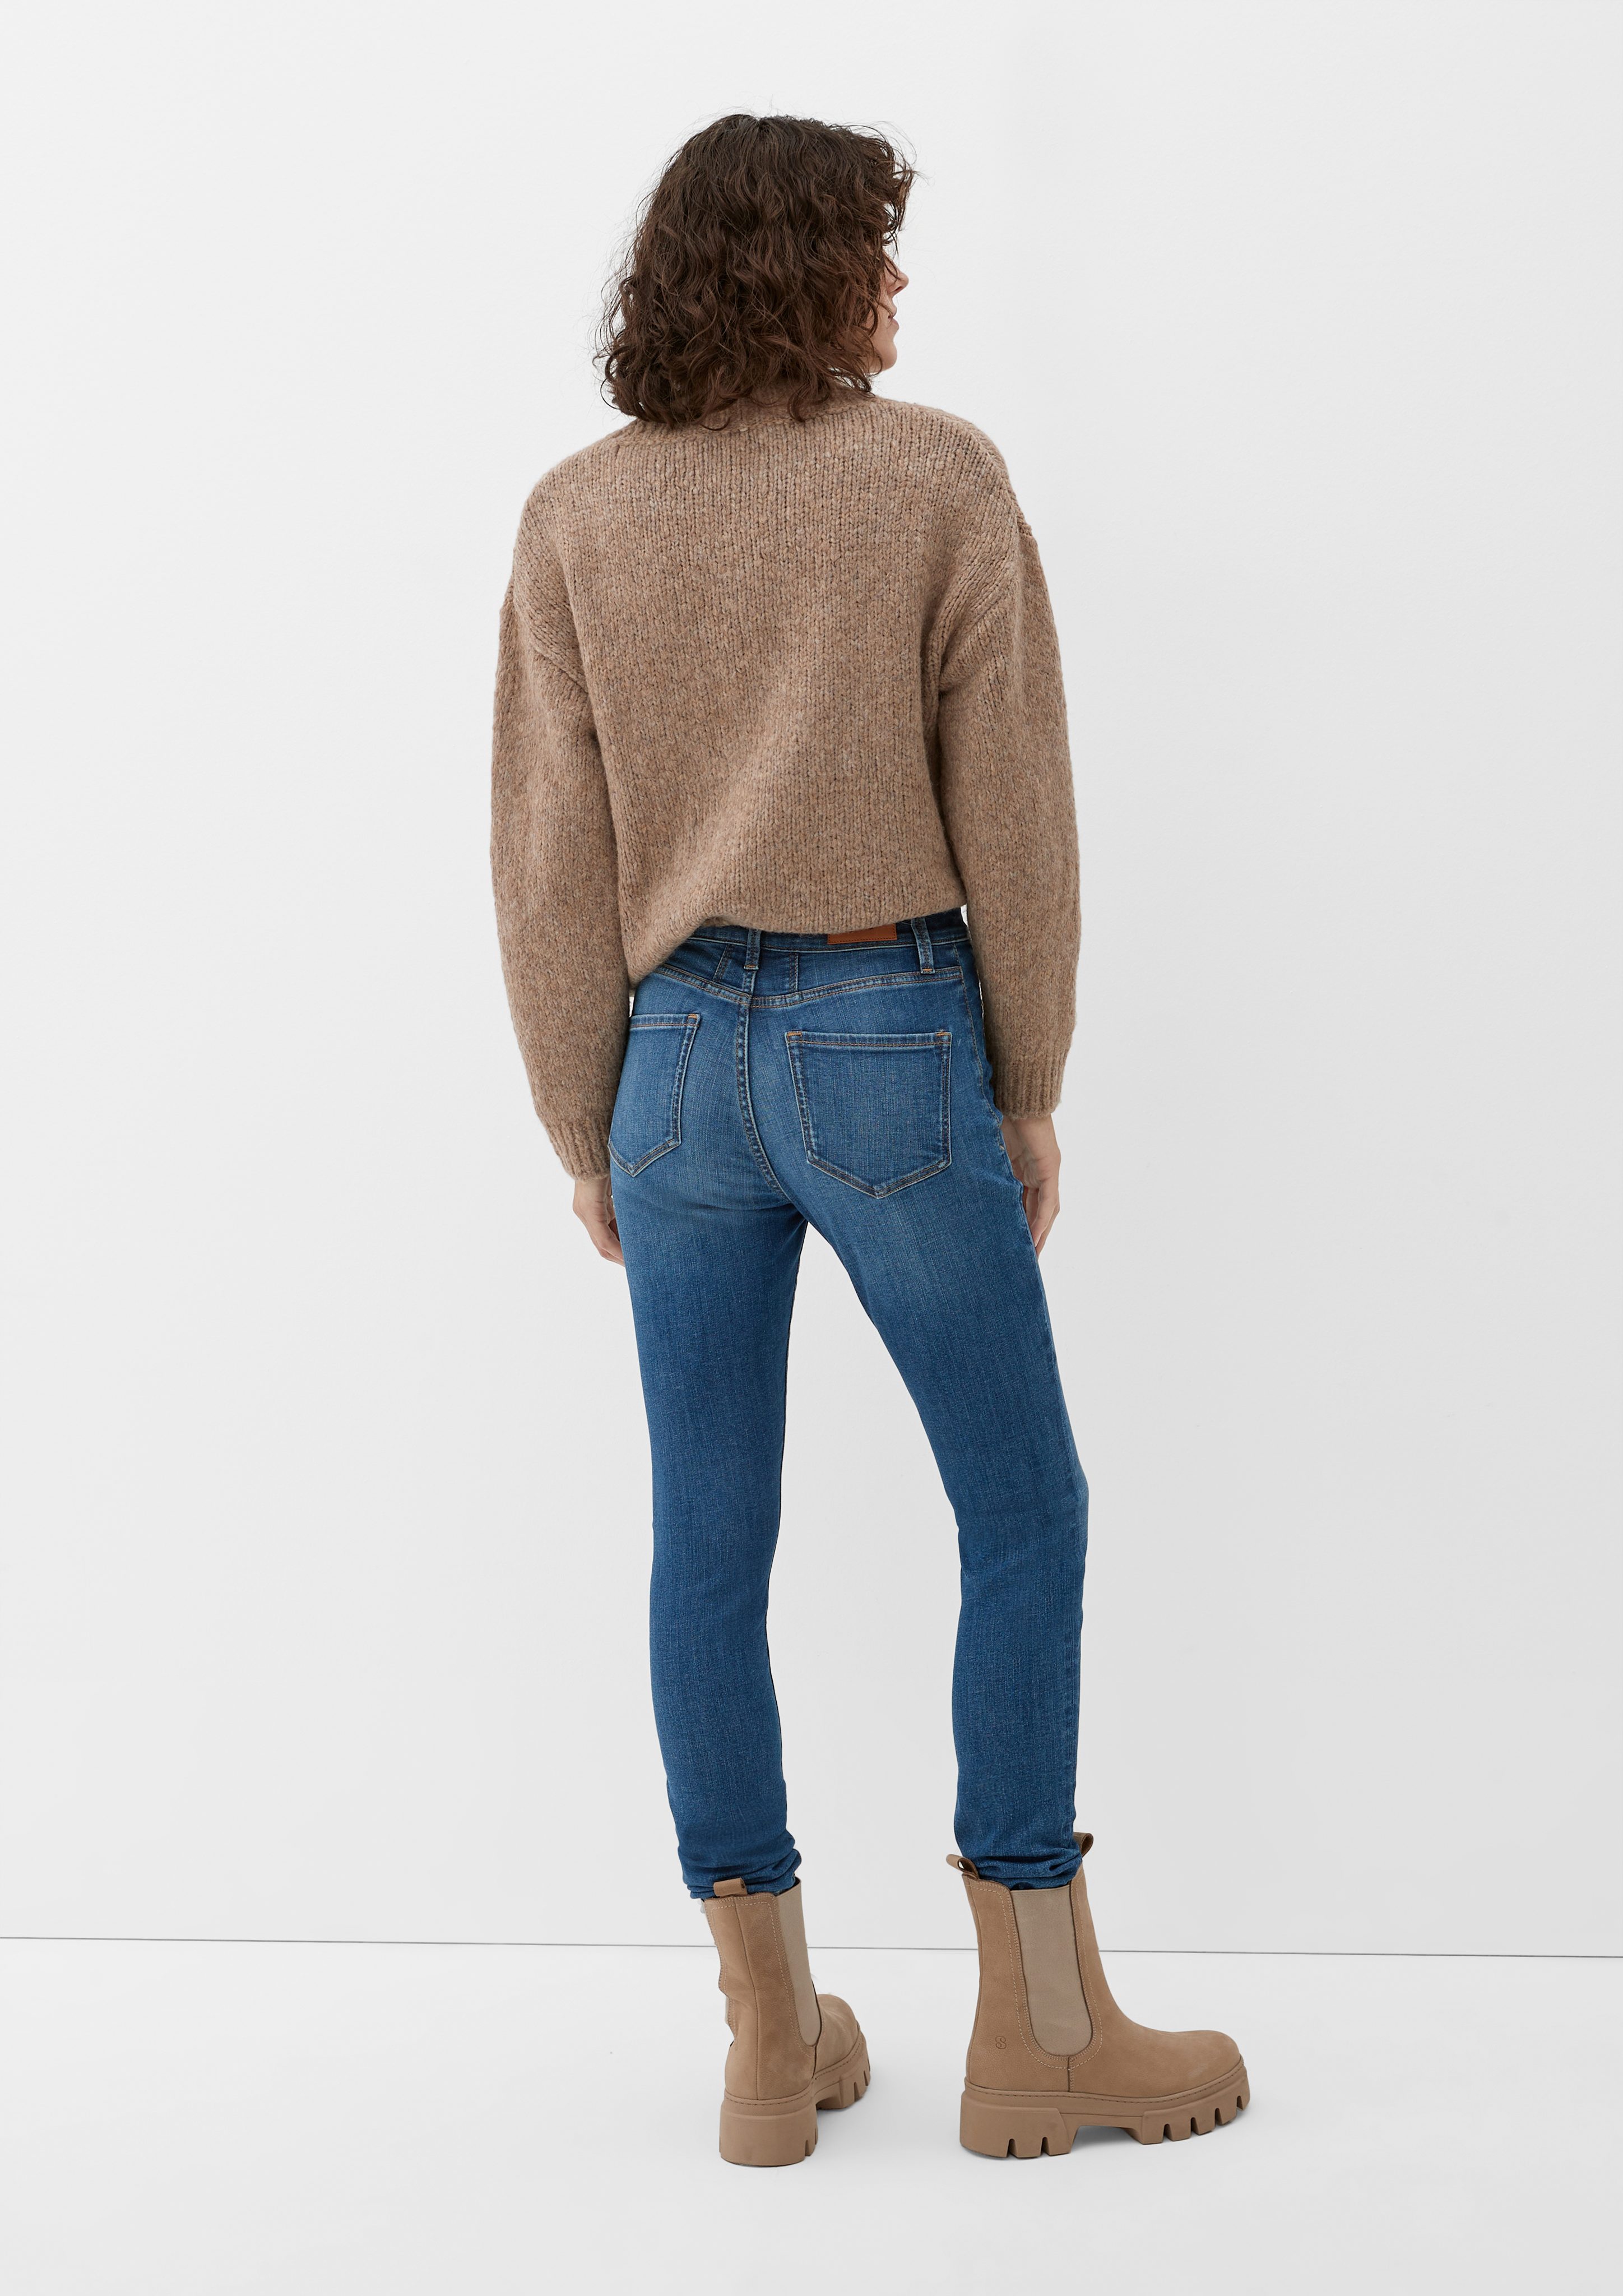 hellblau High Fit Jeans Waschung / s.Oliver / 5-Pocket-Jeans Leg Skinny Rise Skinny Izabell /